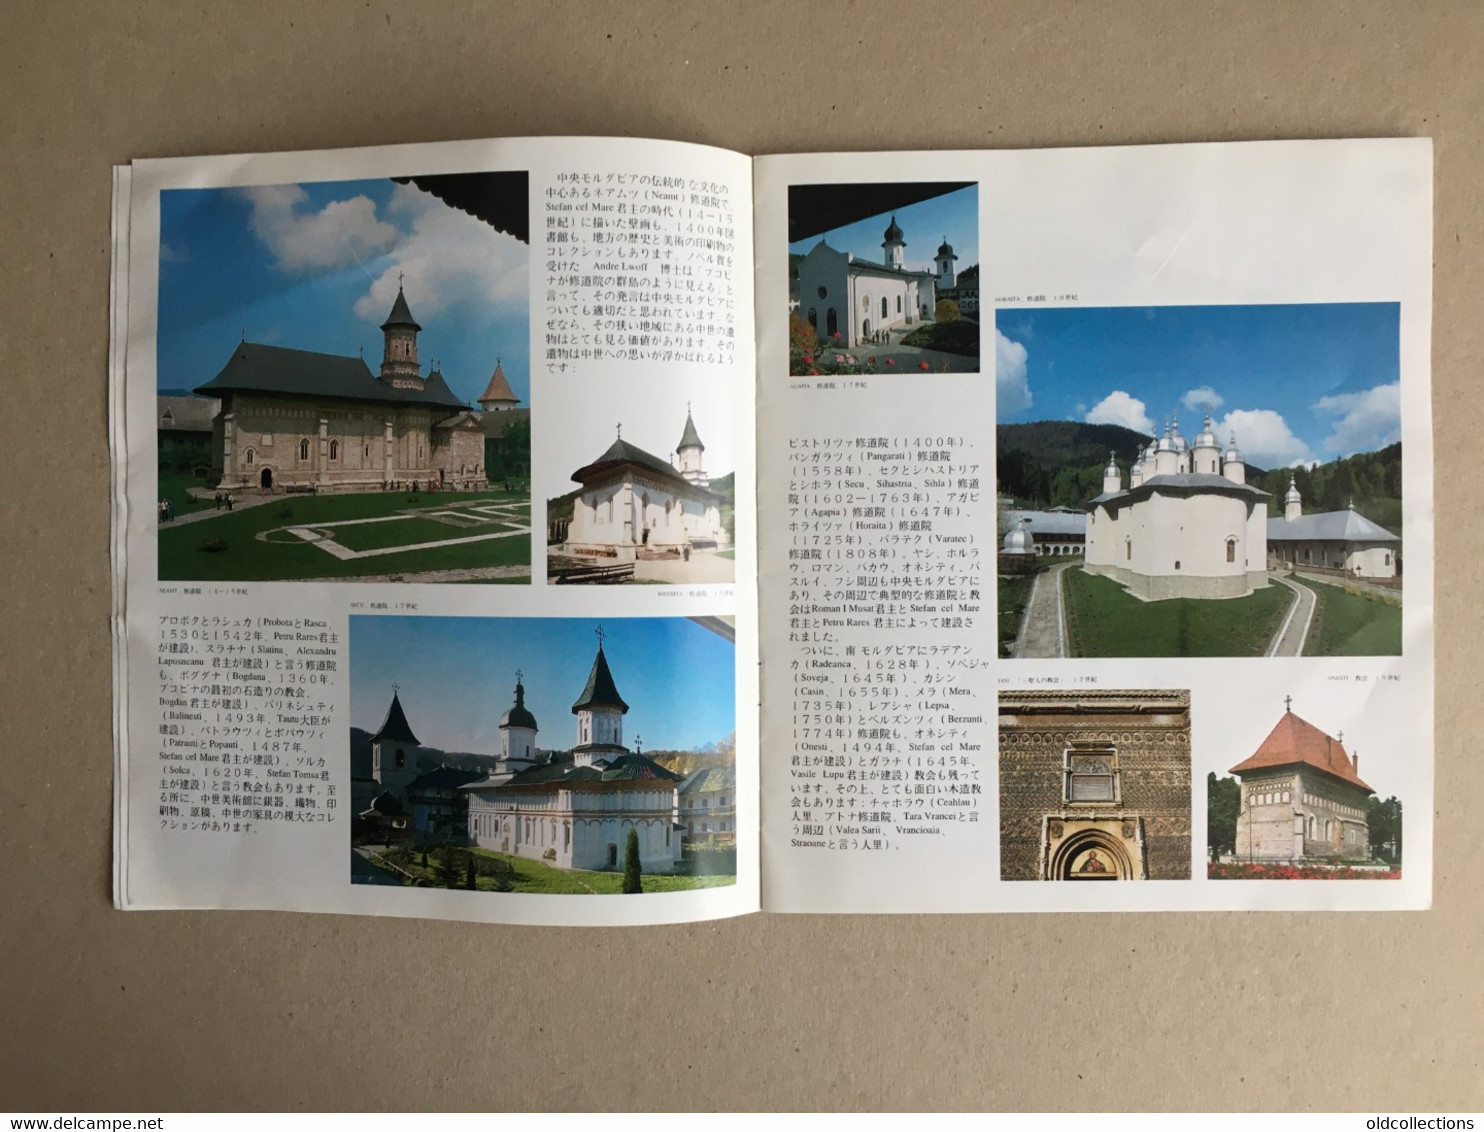 Romania, The Ethnographic Area Of The Moldova Region (Bucovina, Suceava) Chinese Language, Tourist Brochure 14 Pages - Toerisme